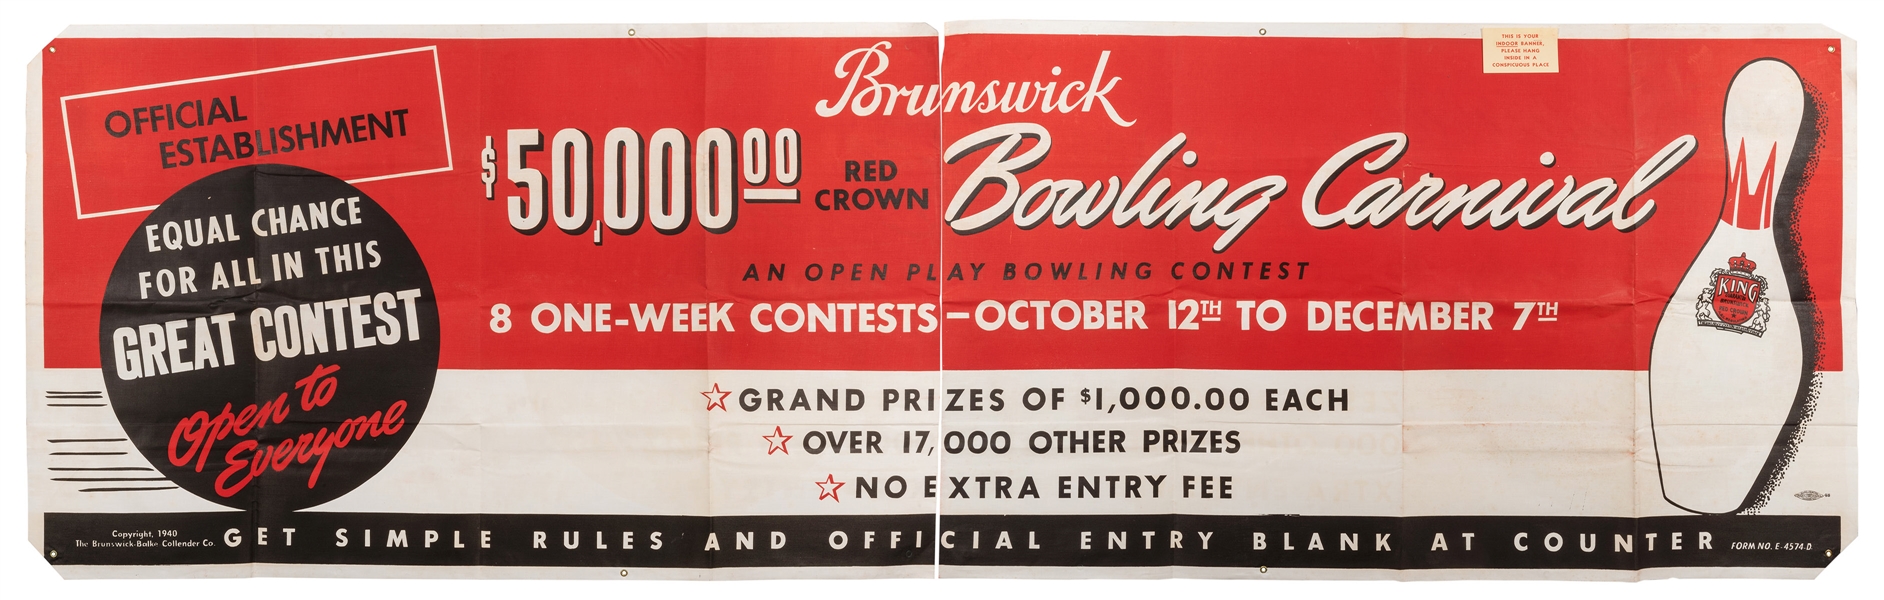  Brunswick Bowling Contest Advertisement Banner. The Brunswi...